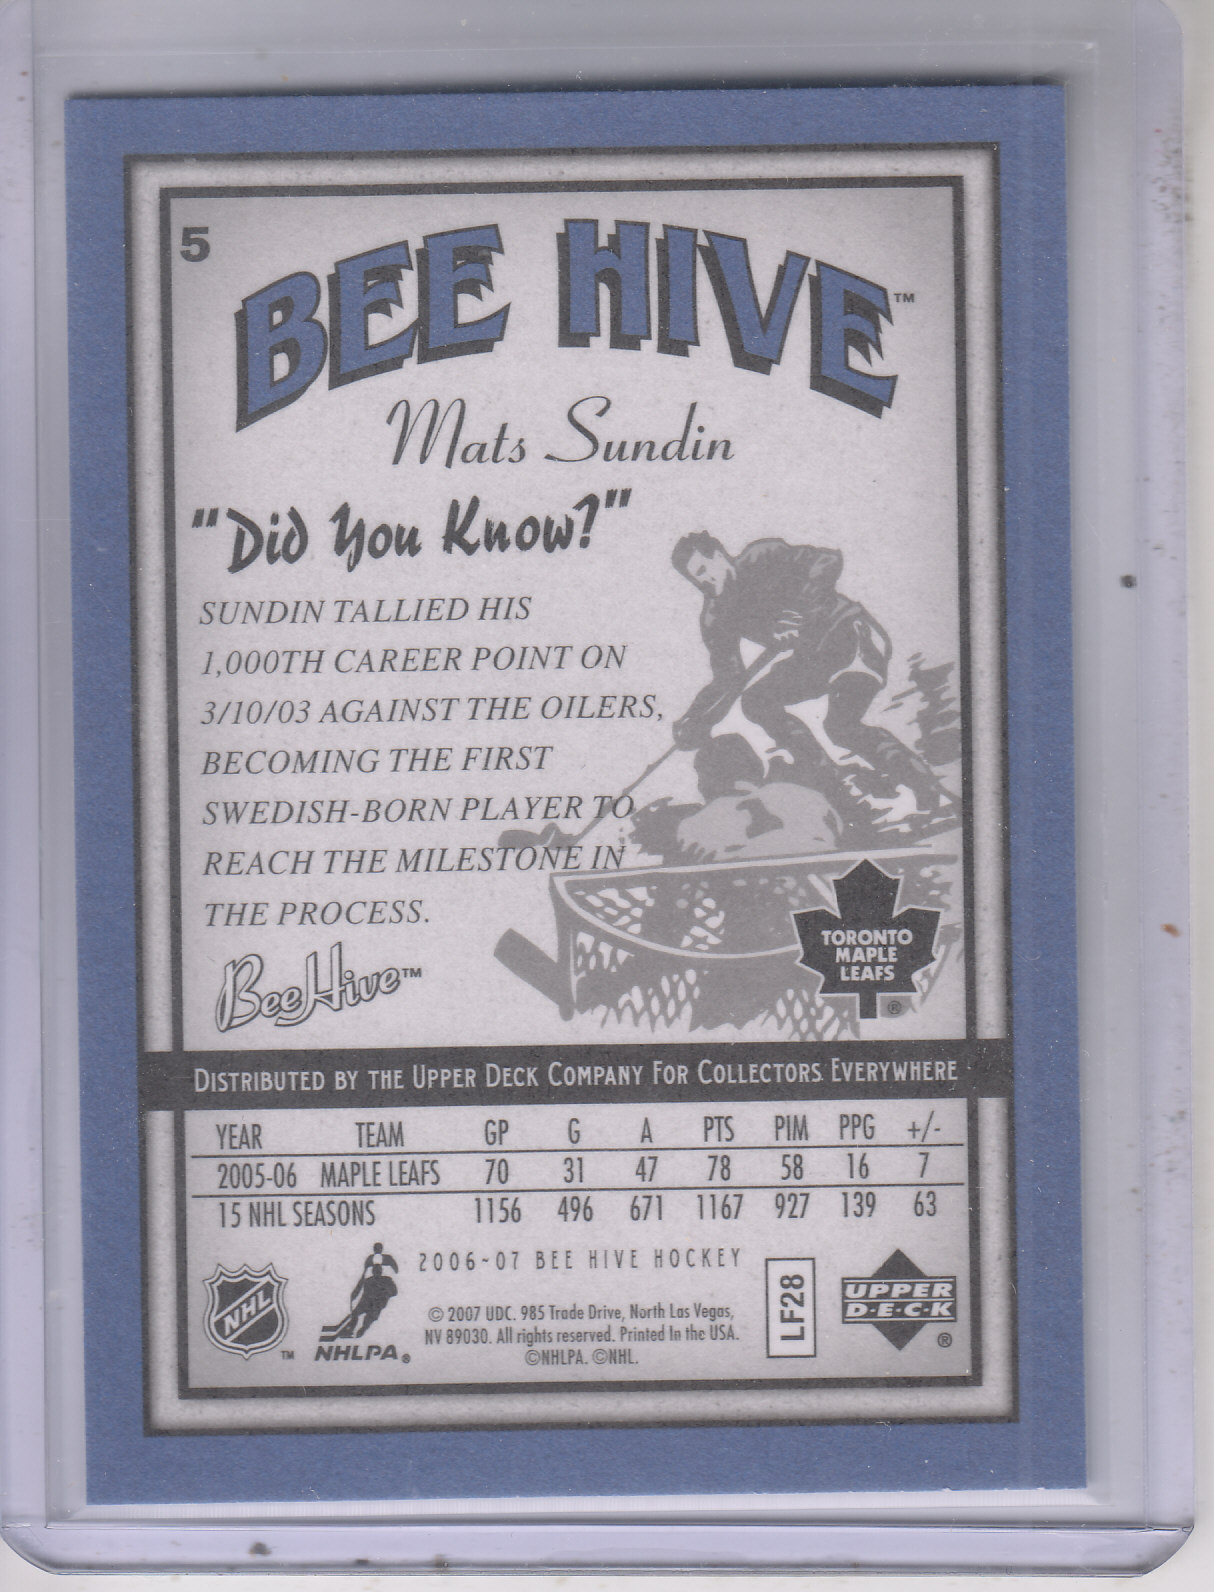 2006-07 Beehive Blue #5 Mats Sundin back image